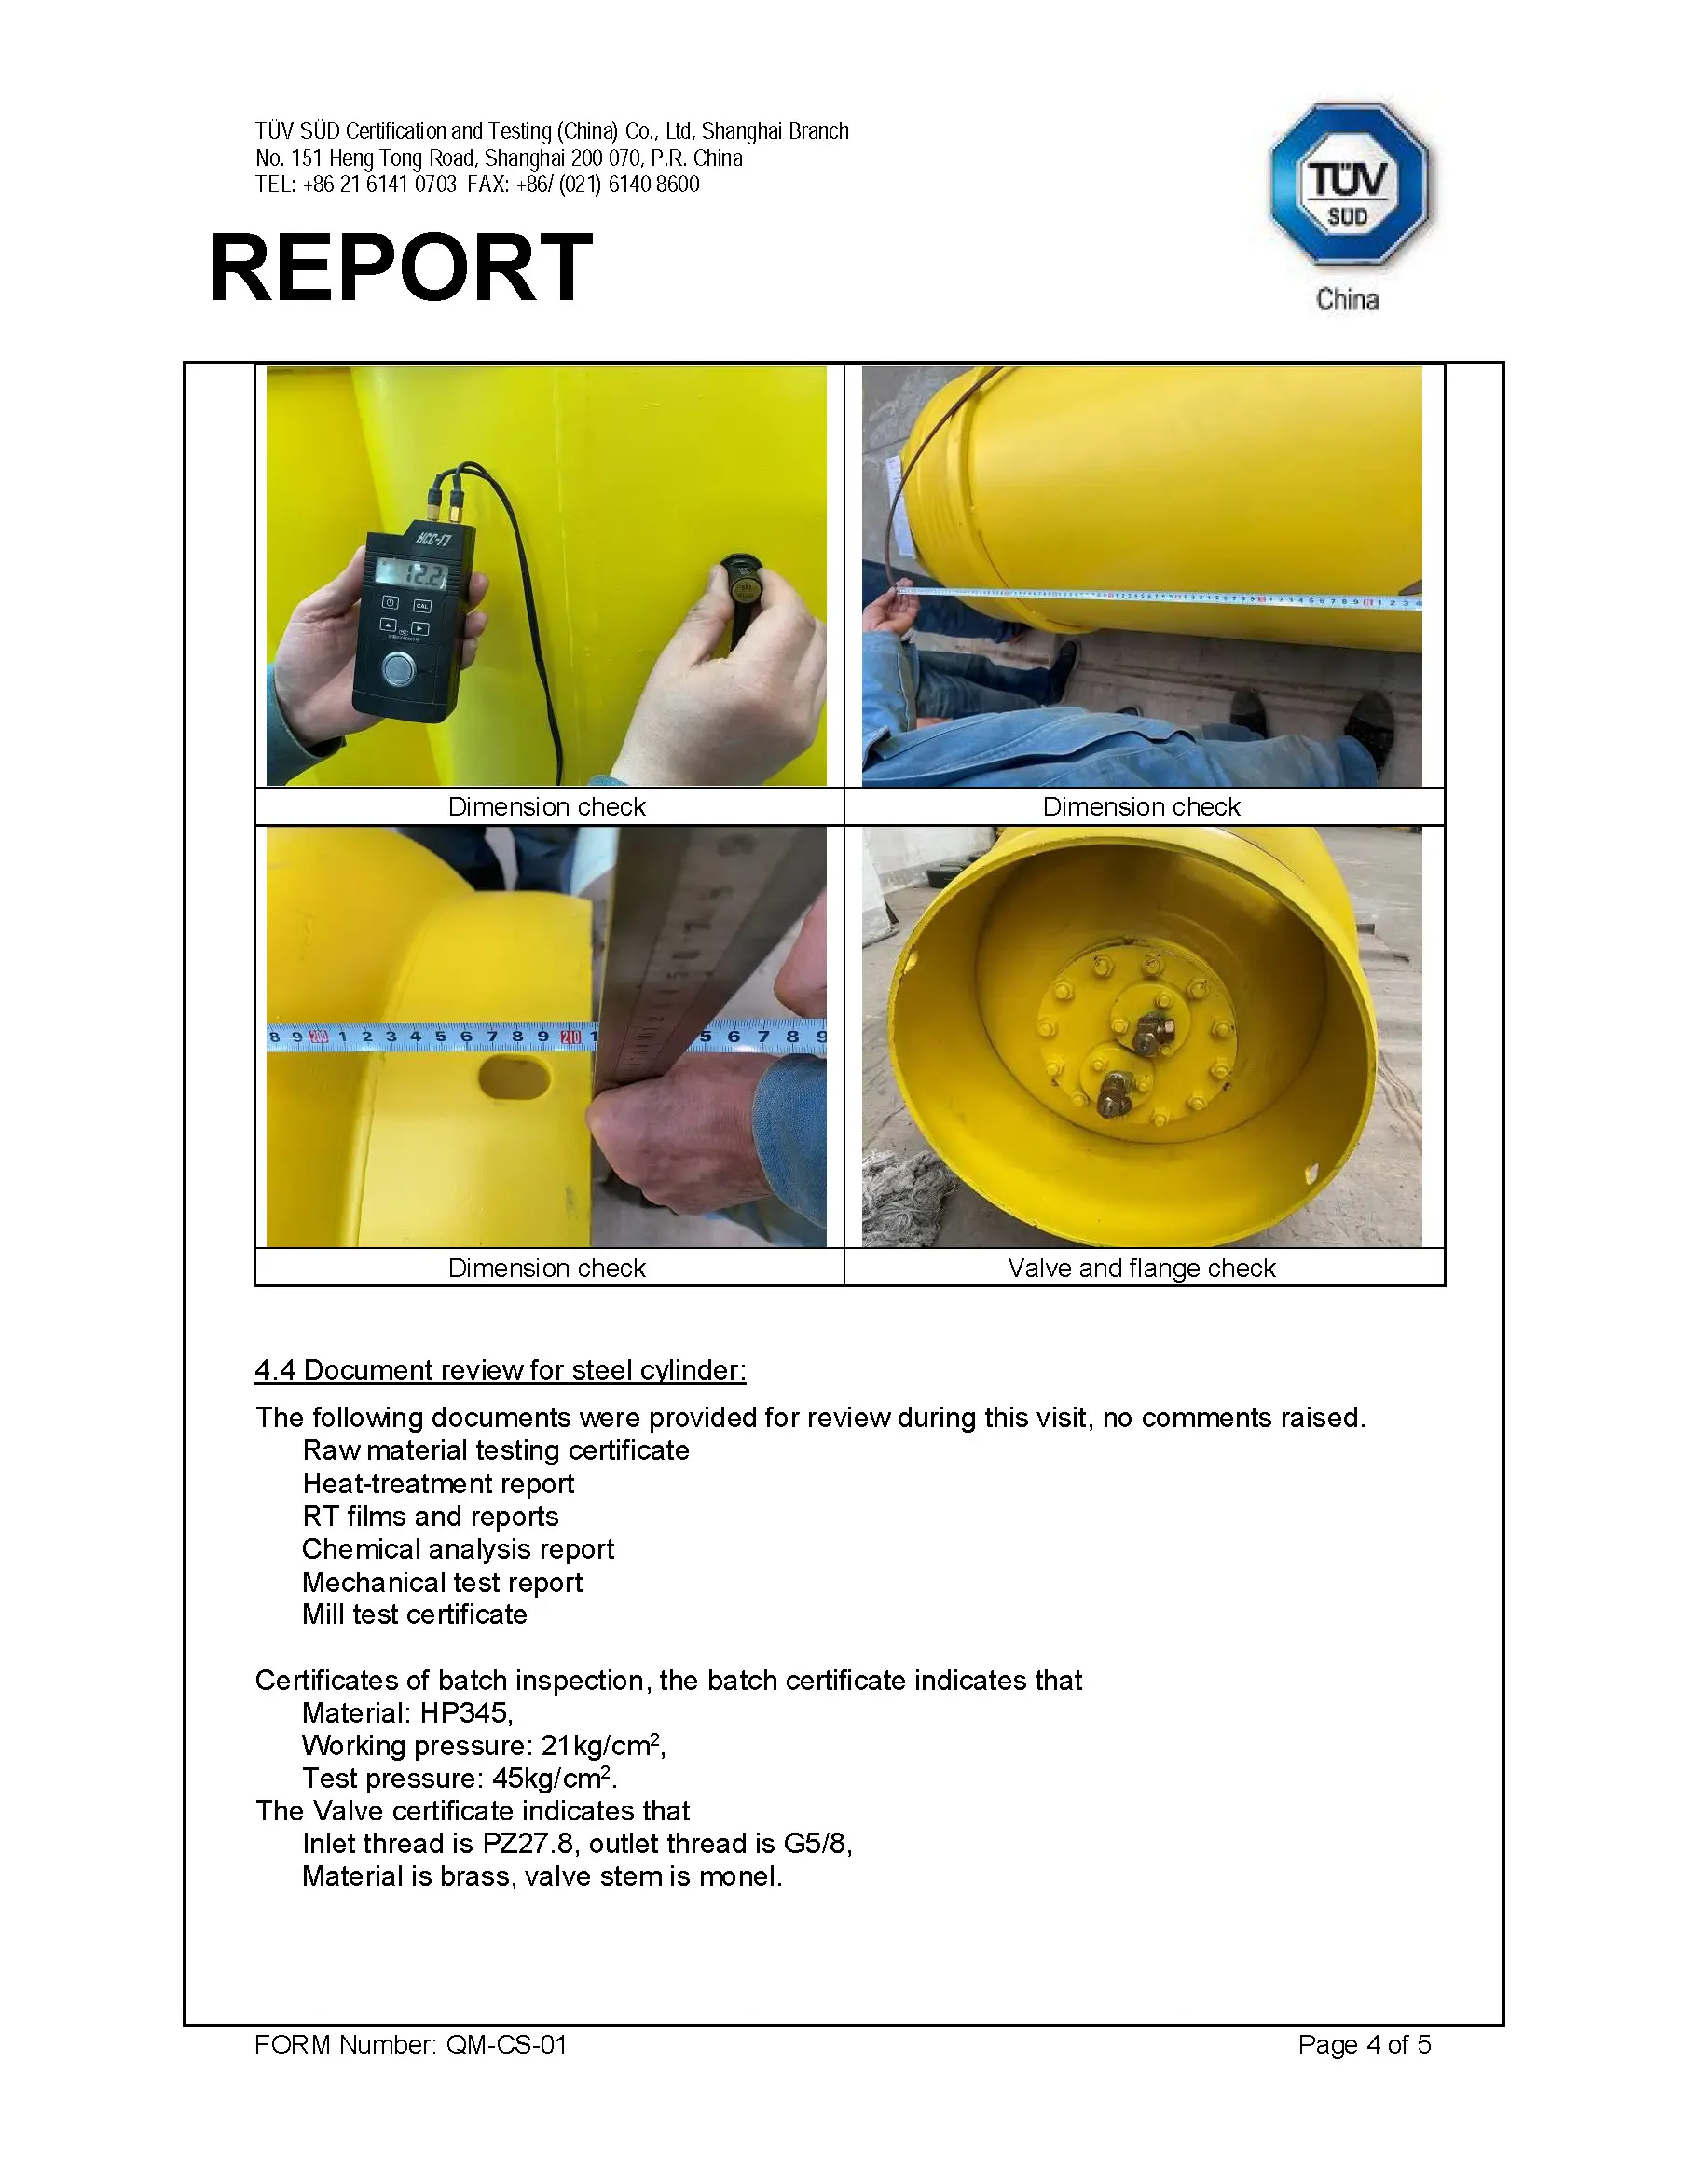 chlorine cylinder TUV test report 4